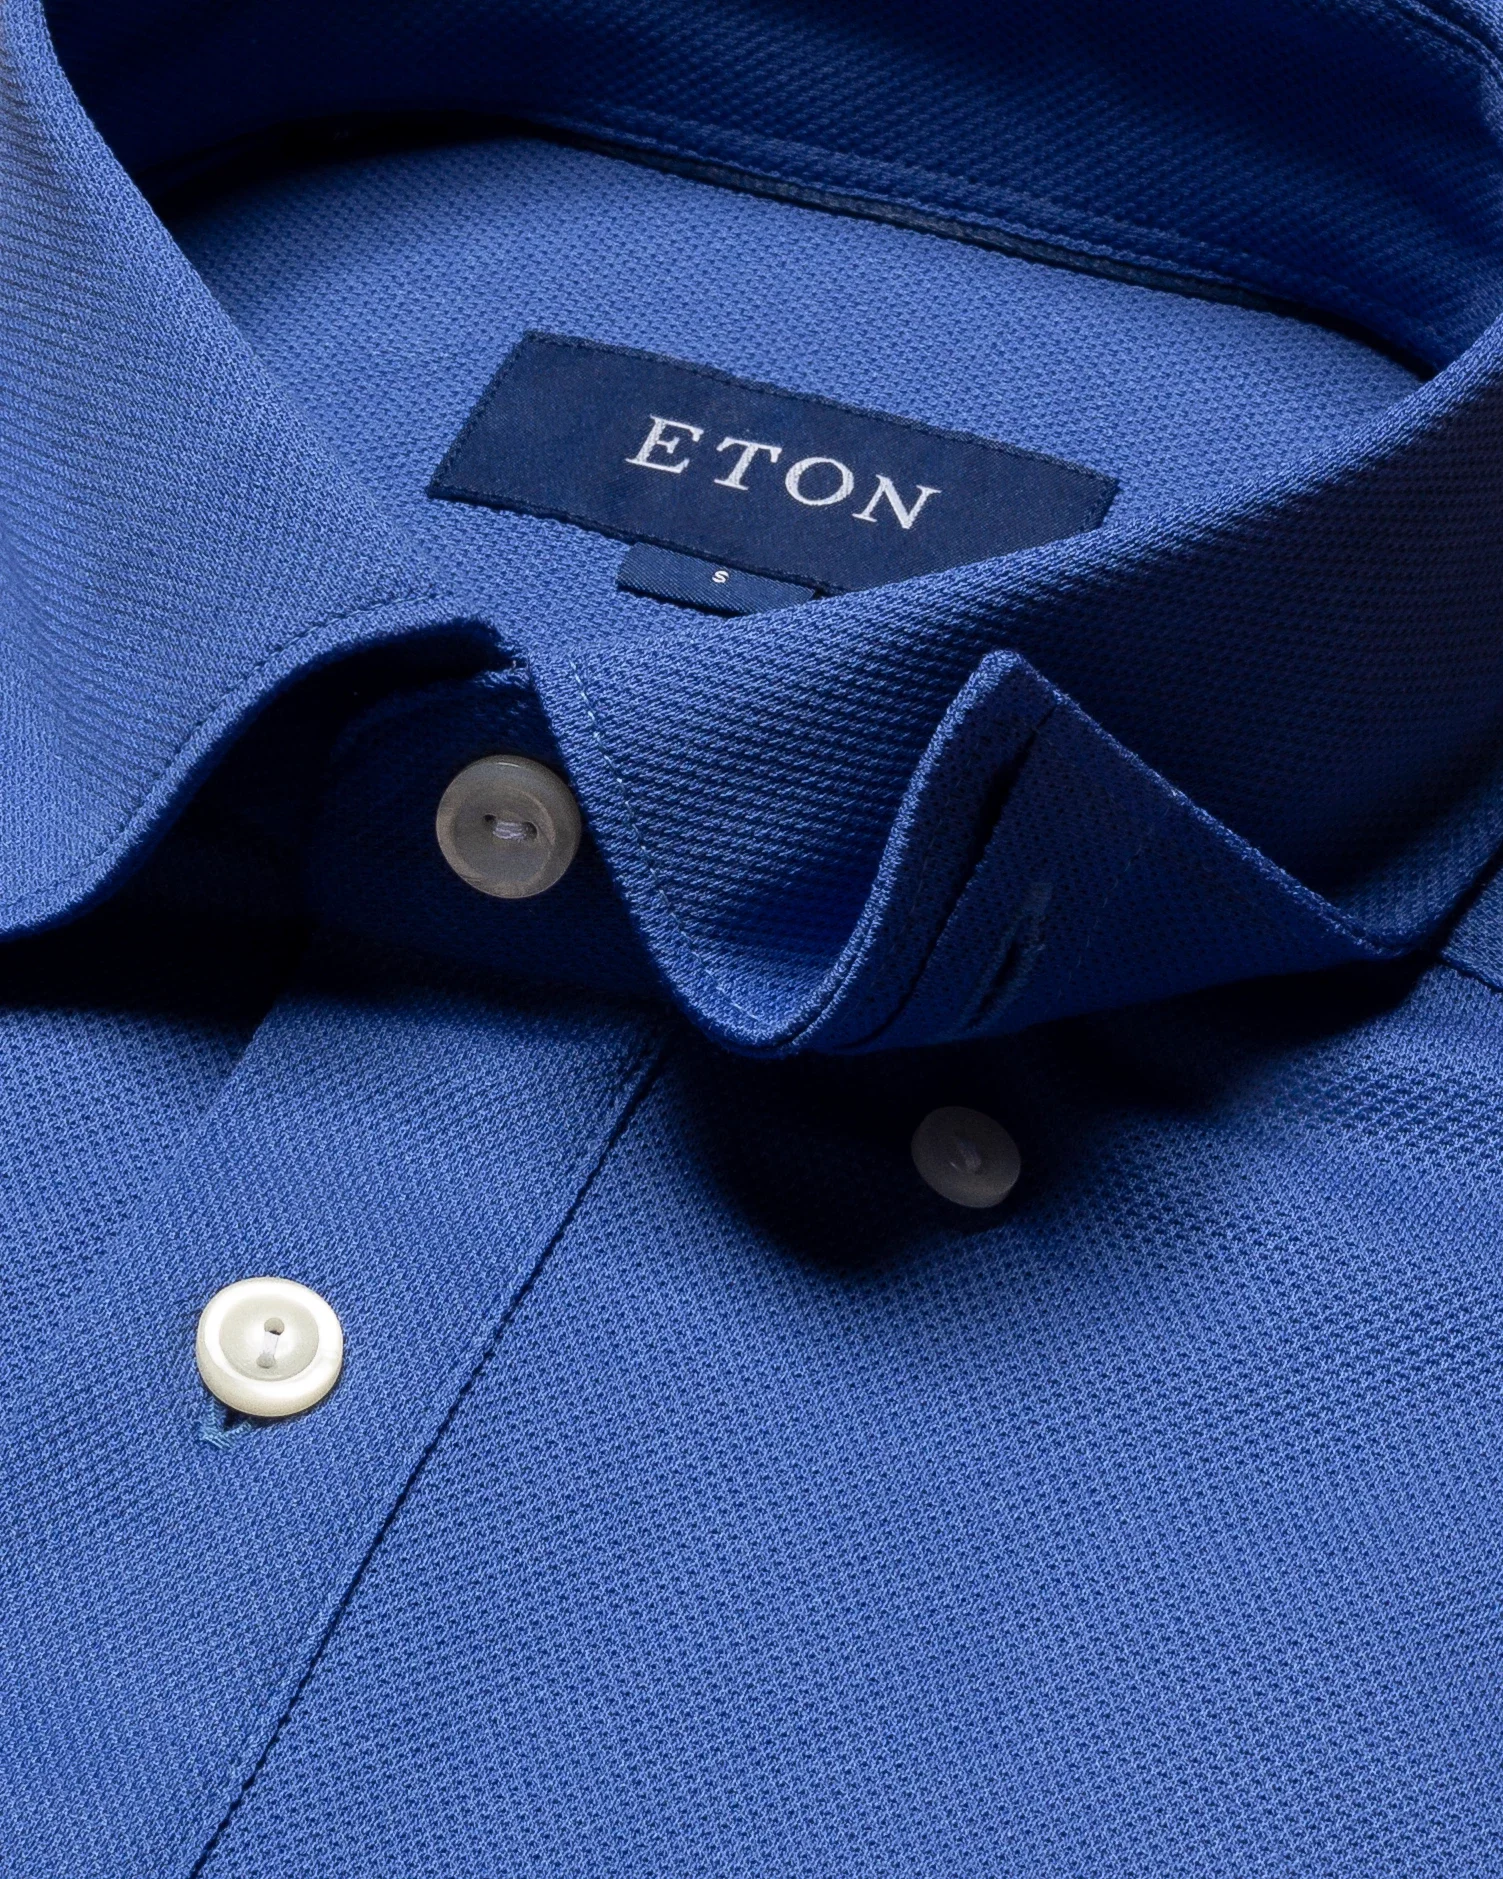 Eton - cornflower polo shirt long sleeved